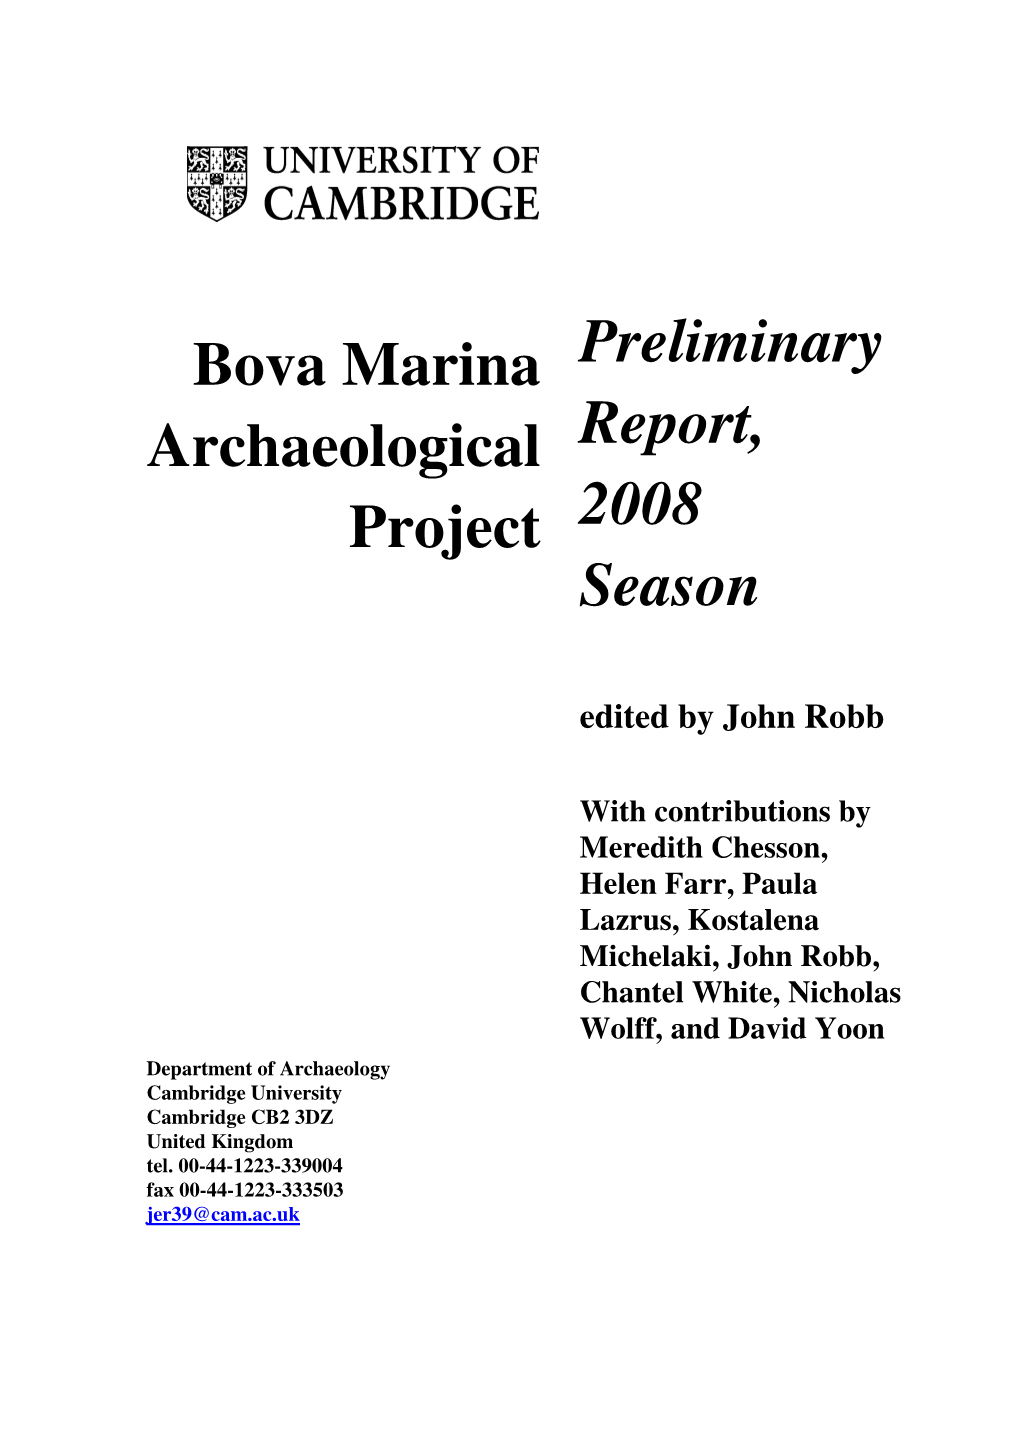 Bova Marina Archaeological Project Preliminary Report, 2008 Season